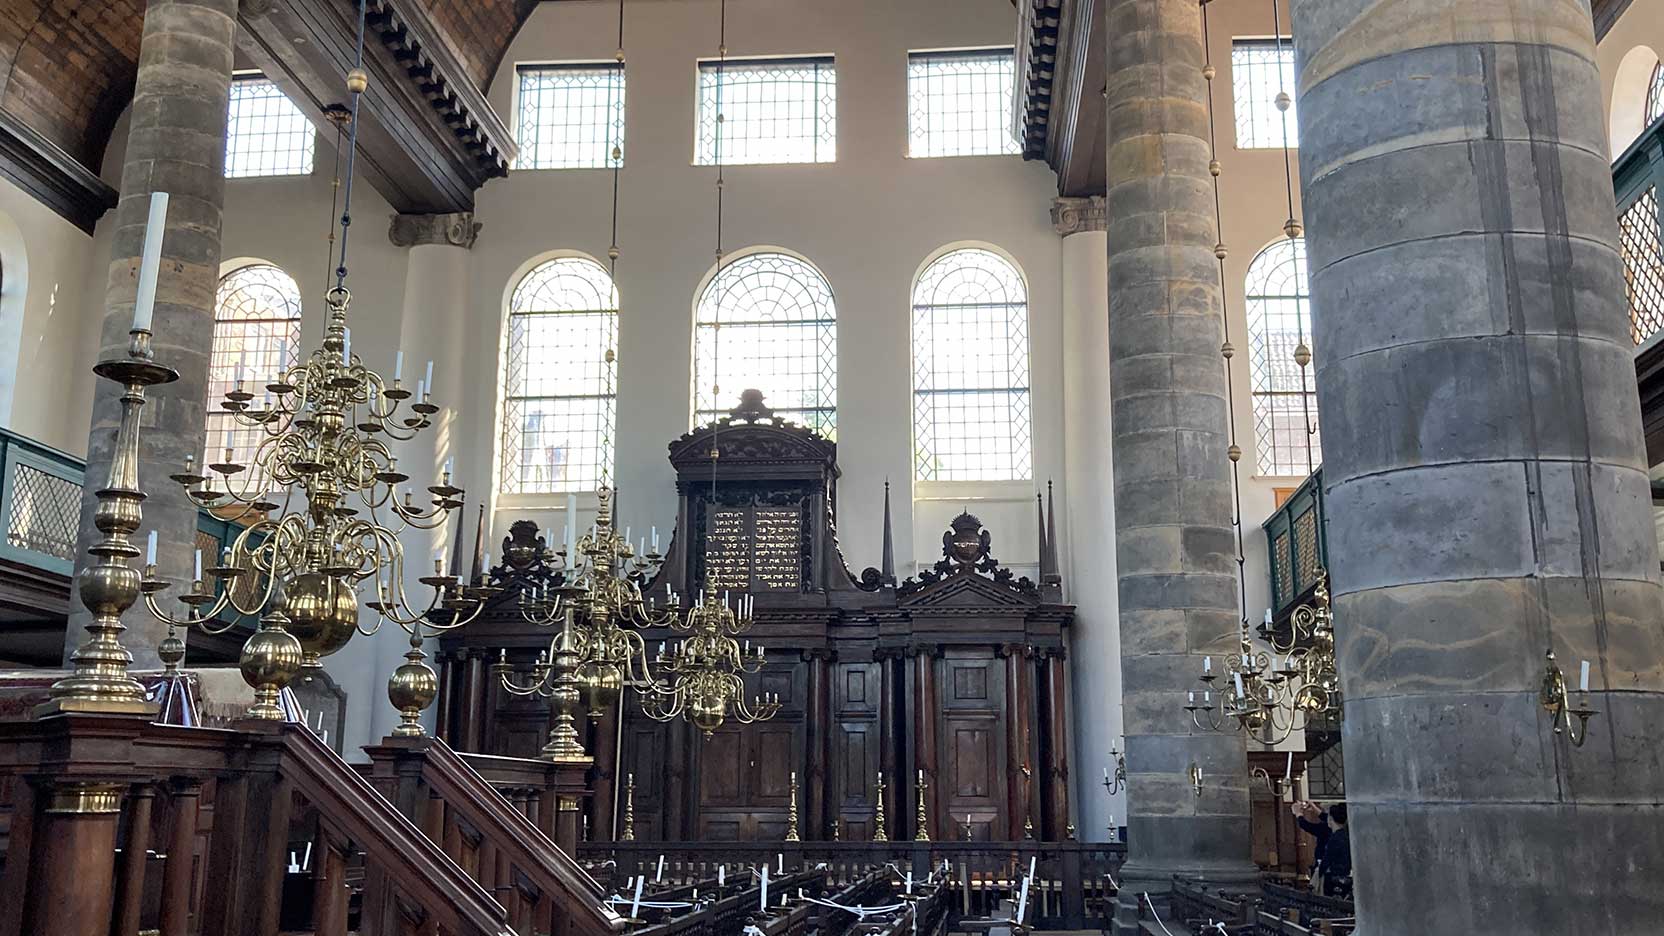 Portuguese Synagogue, Amsterdam